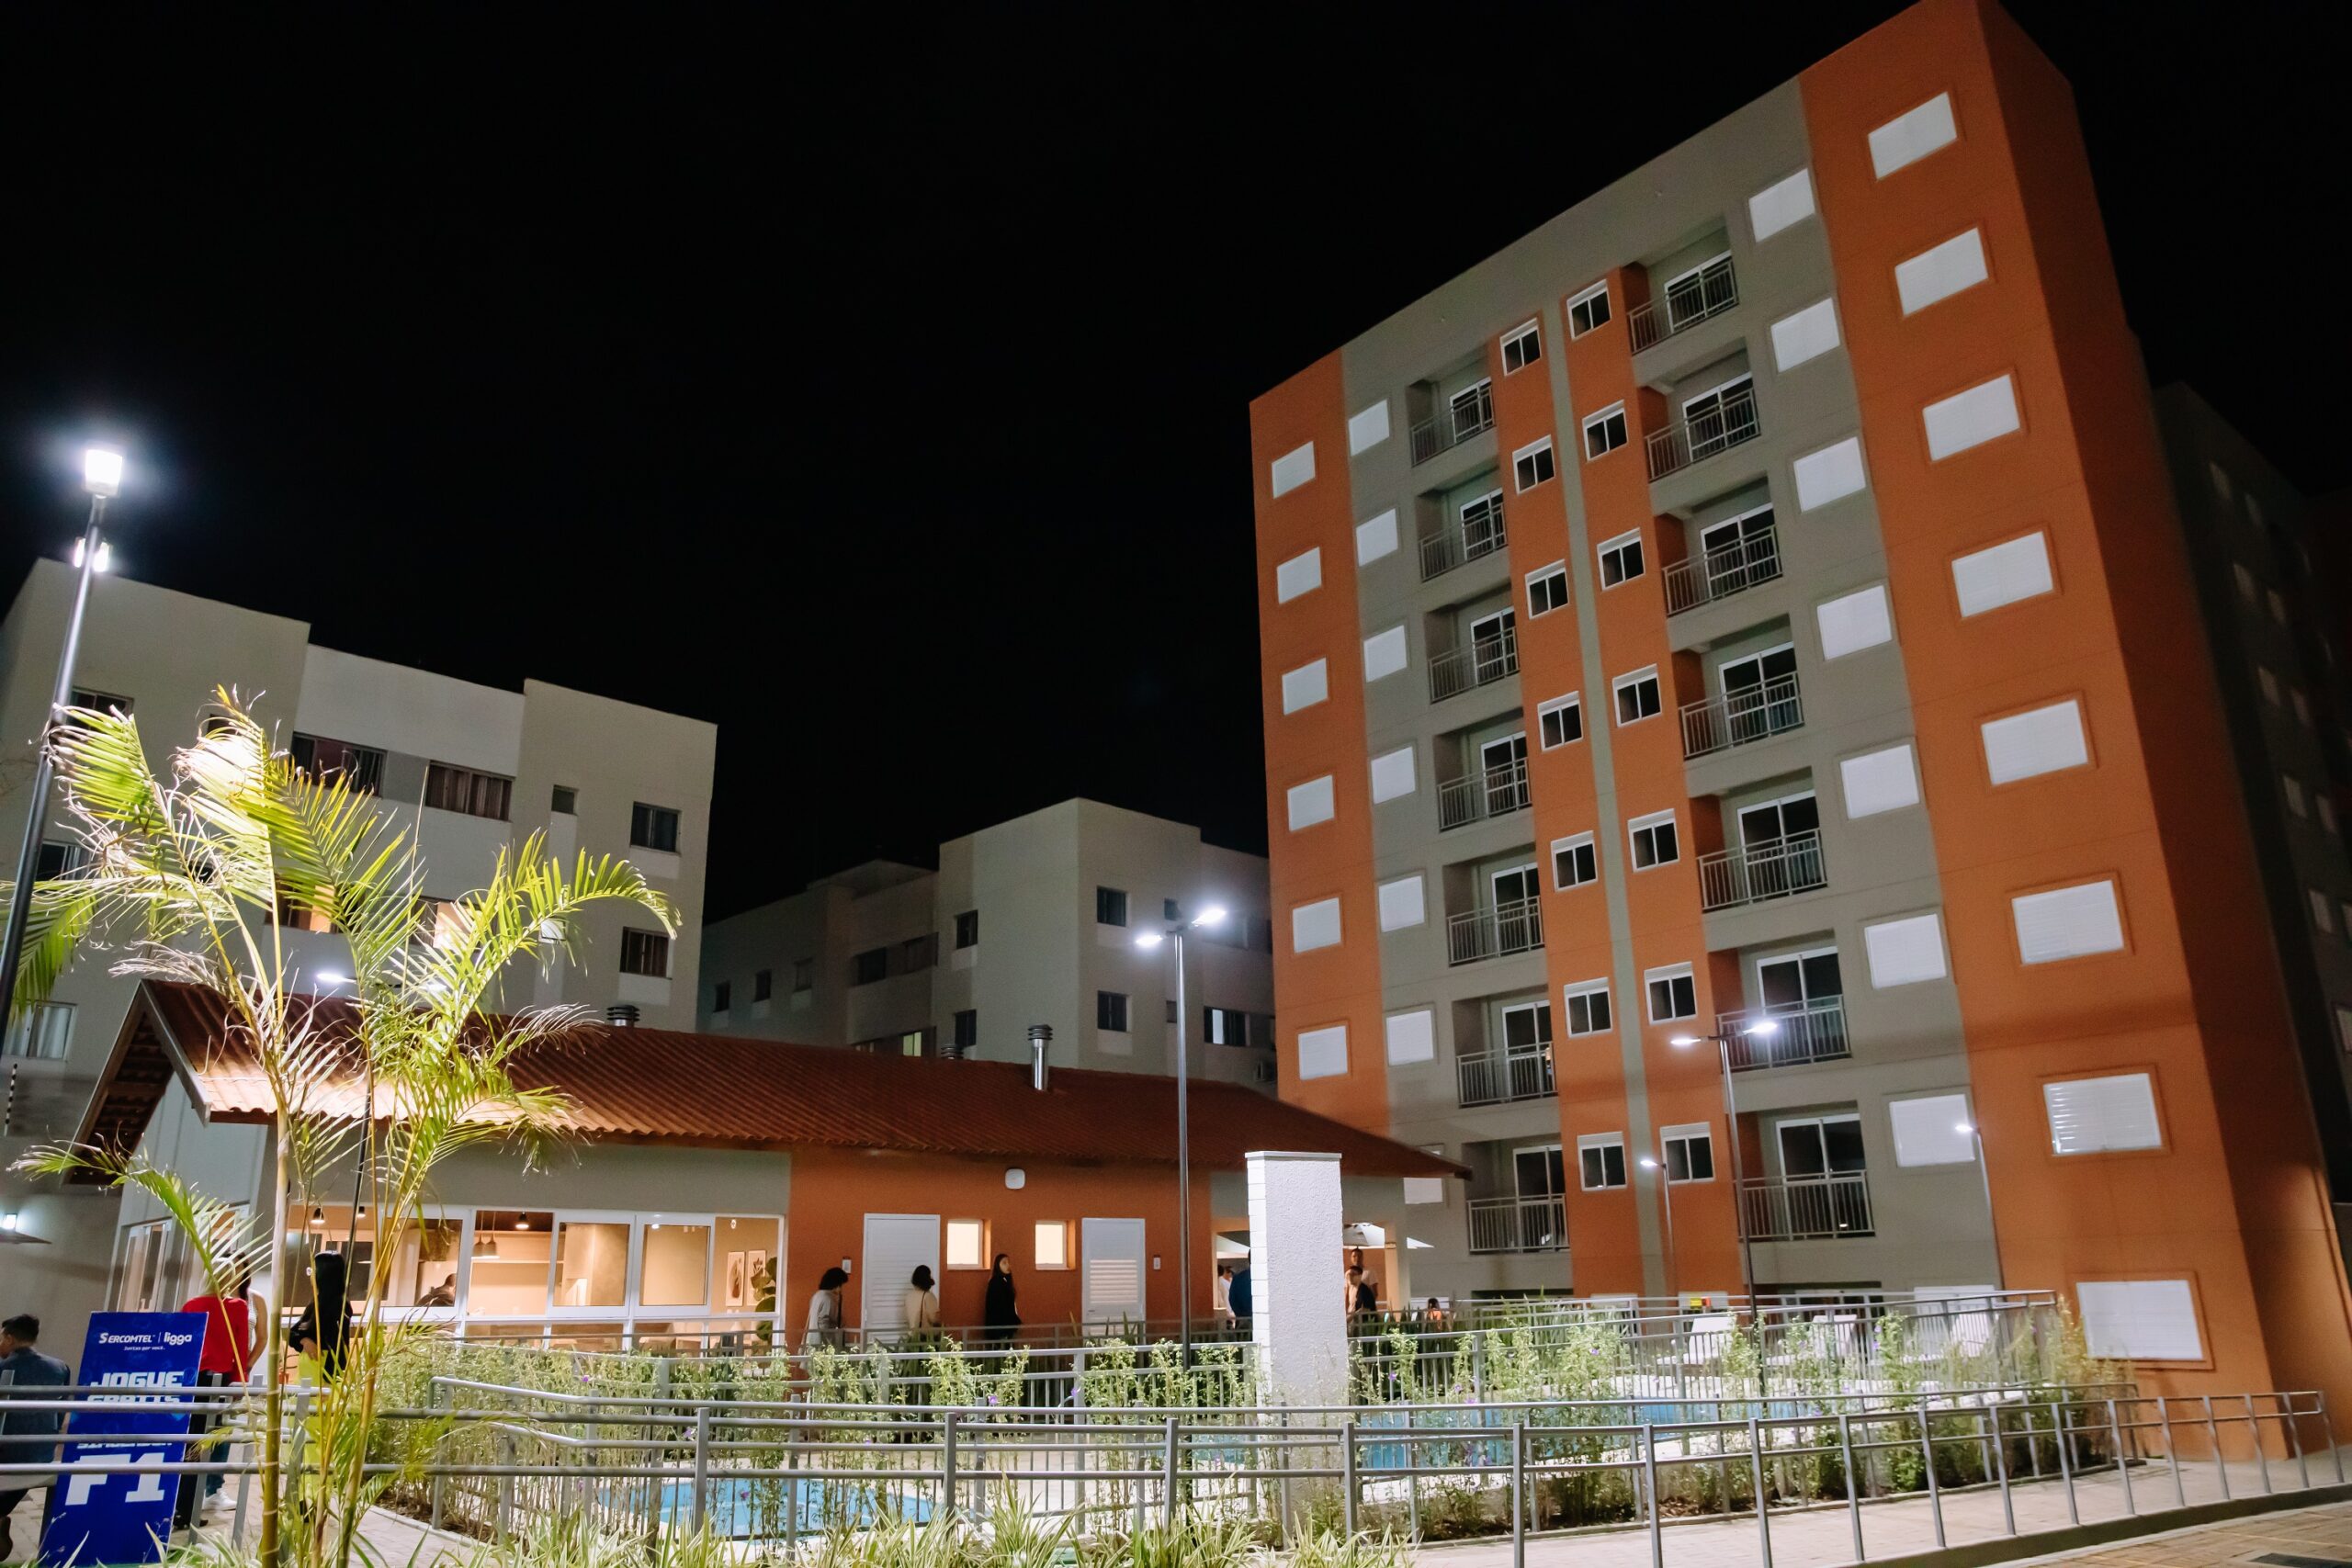 Novo empreendimento residencial reforça potencial habitacional de Cambé (PR)